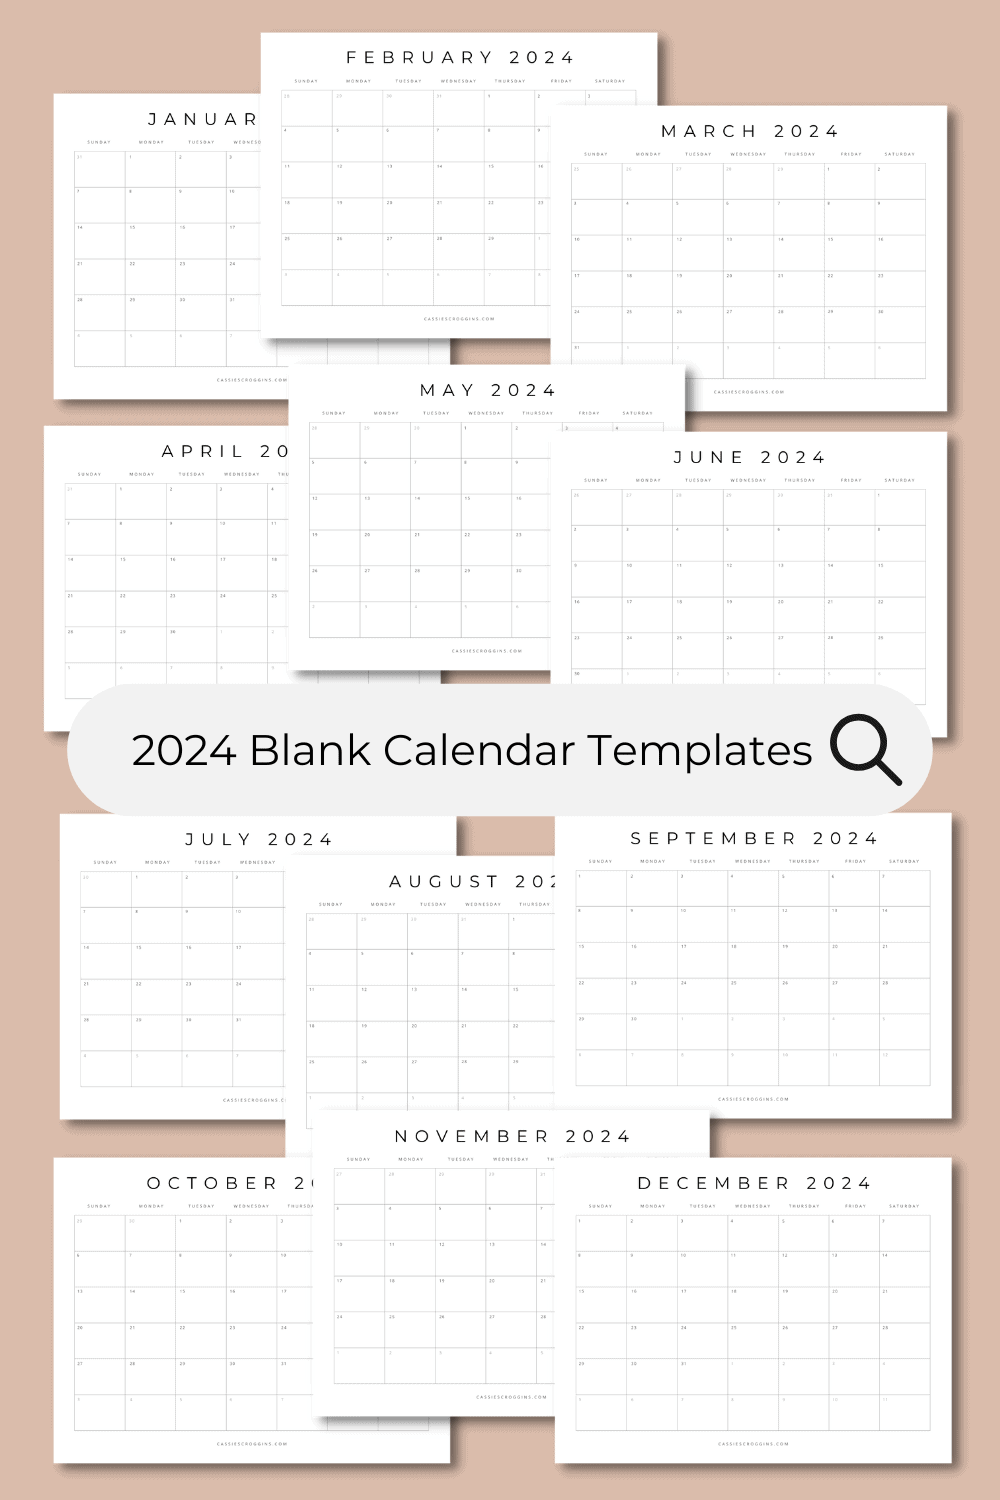 Free Printable 2024 Blank Calendar Templates (All 12 Months) intended for Free Printable Blank Square Calendar 2024 Full Year